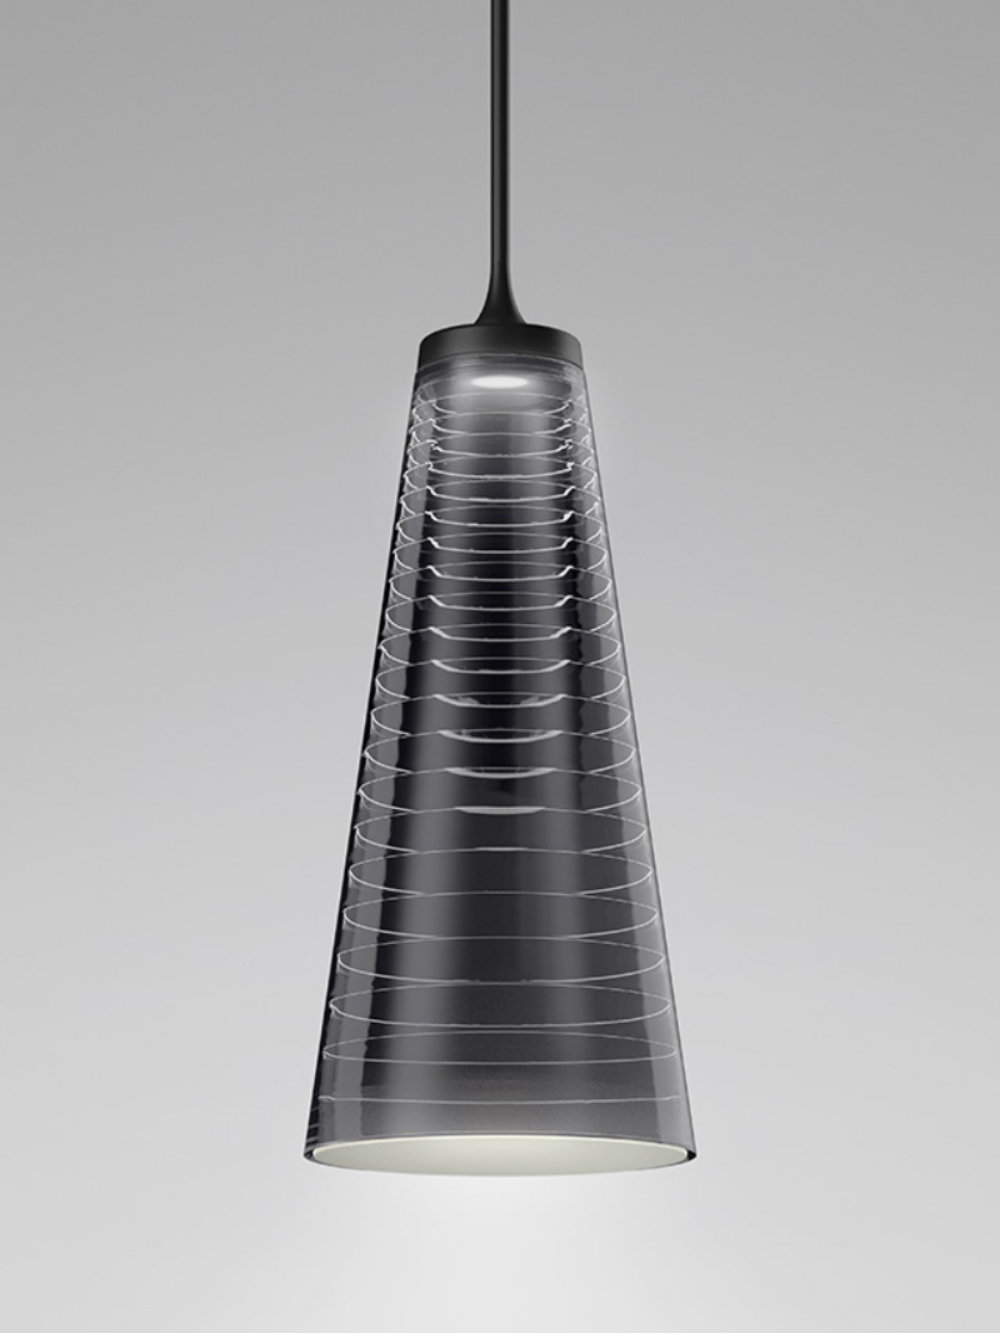 Kitchen Lighting Design: Get To Know Artemide's Suspension Lamps